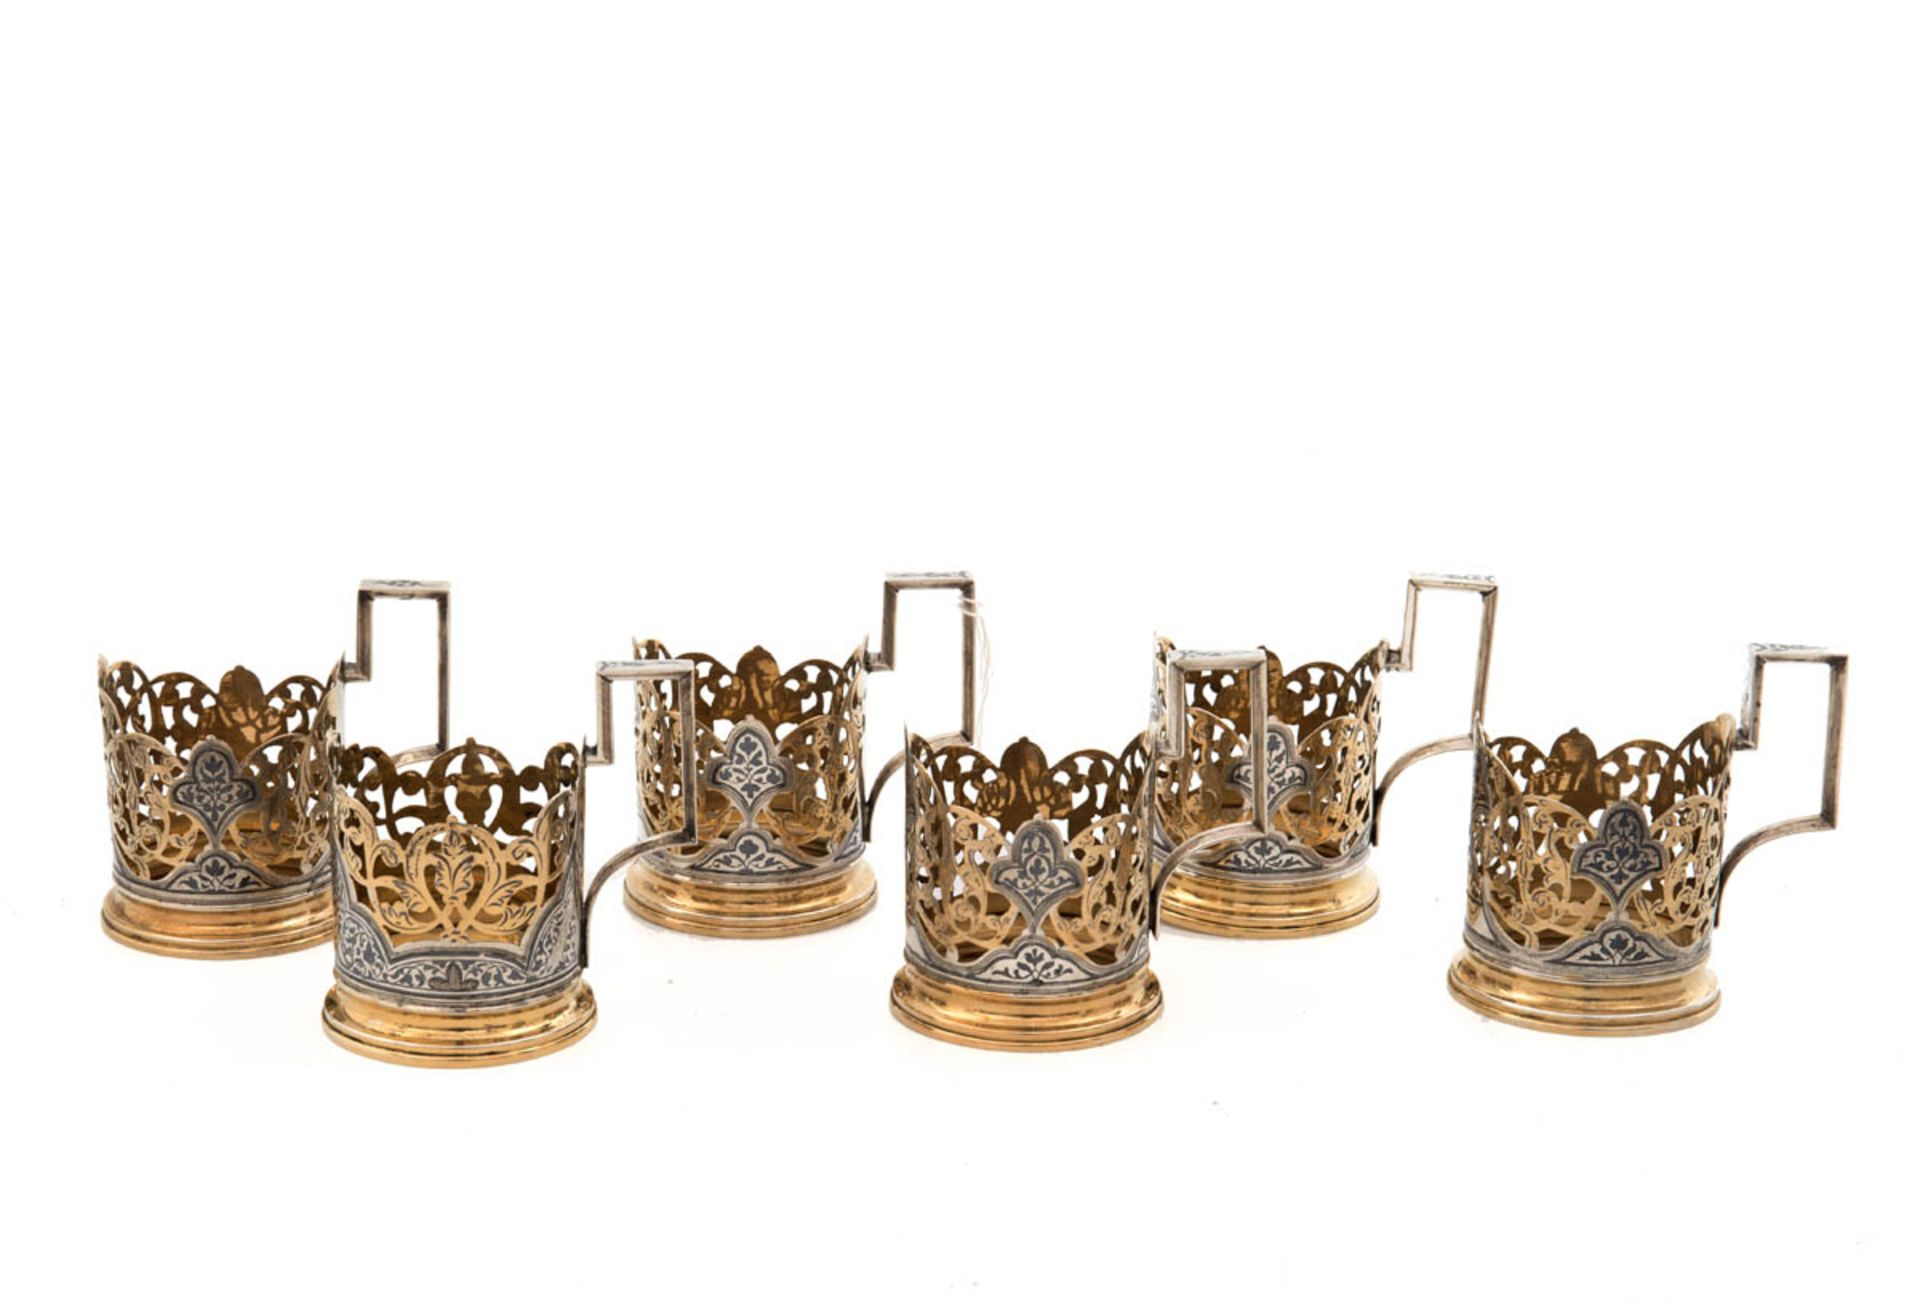 6  Teeglashalter, Russland um 1900  Silber, vergoldet, florale Ornamente in Niello-Technik. Runder